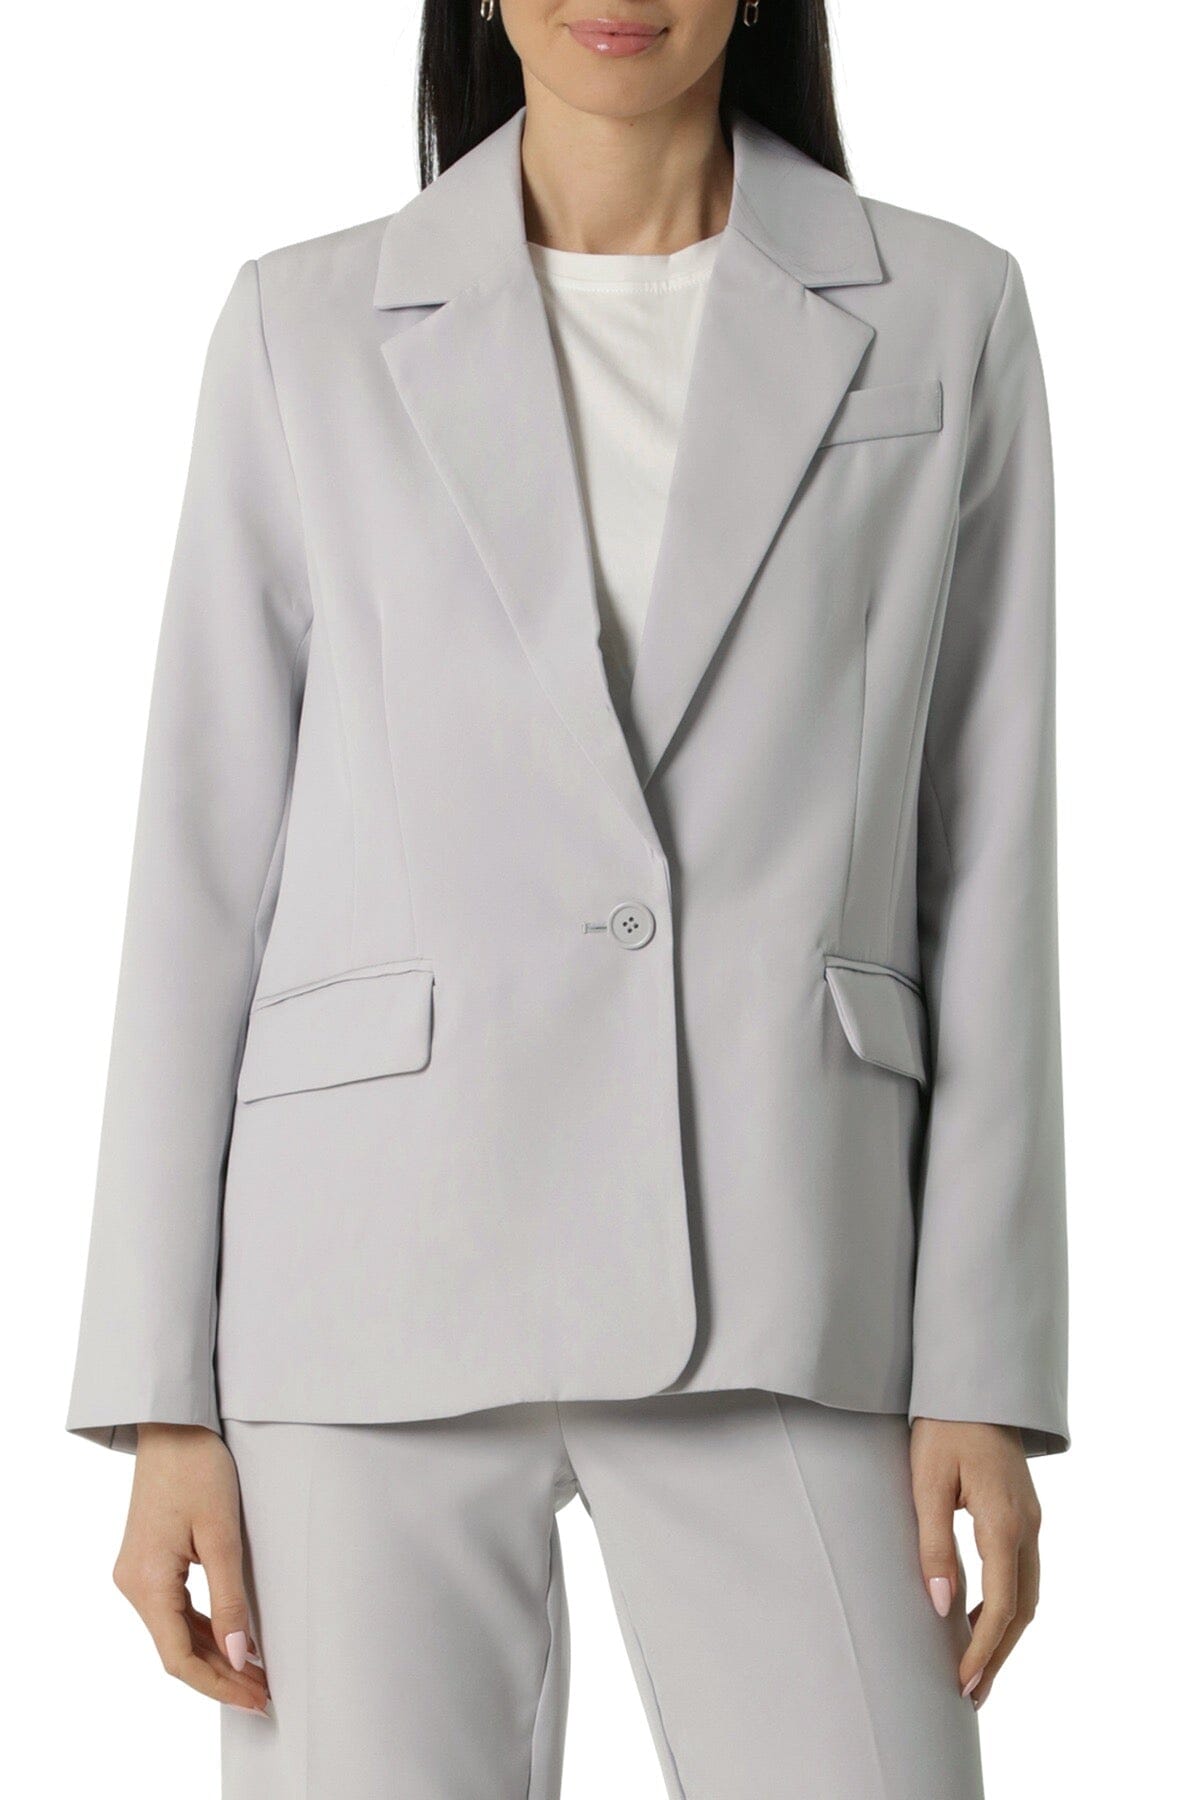 Single Button Stretch Suit Blazer Jacket Coat Sky Blue - Women's Flattering Designer Fashion Cute Workwear 